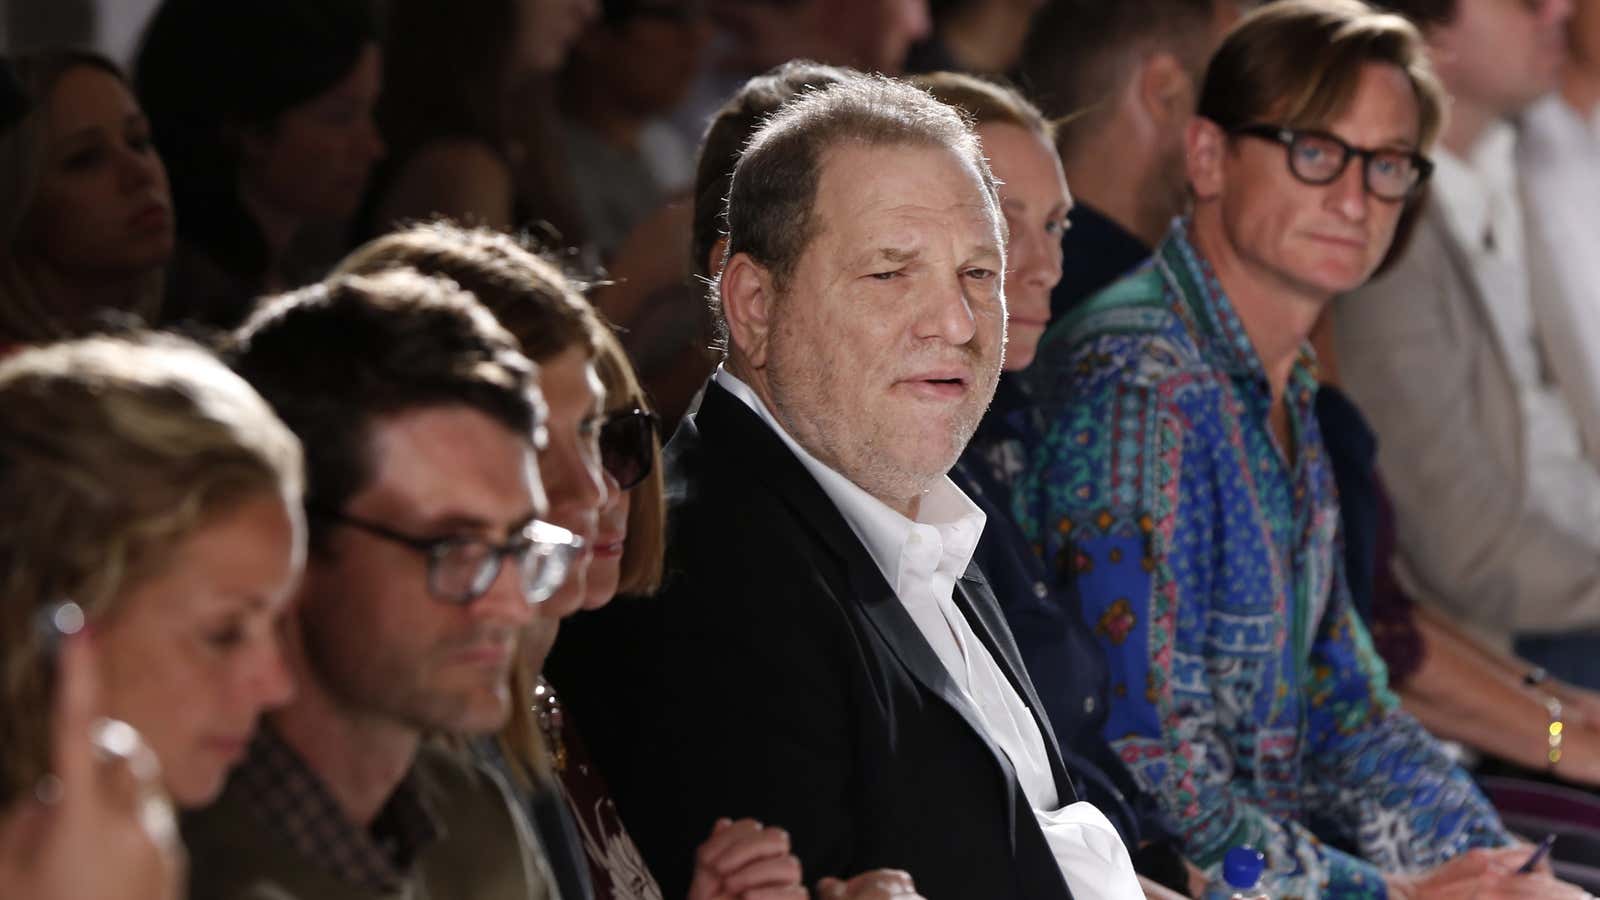 Harvey Weinstein watches the models at the Marchesa spring-summer 2014 runway show.